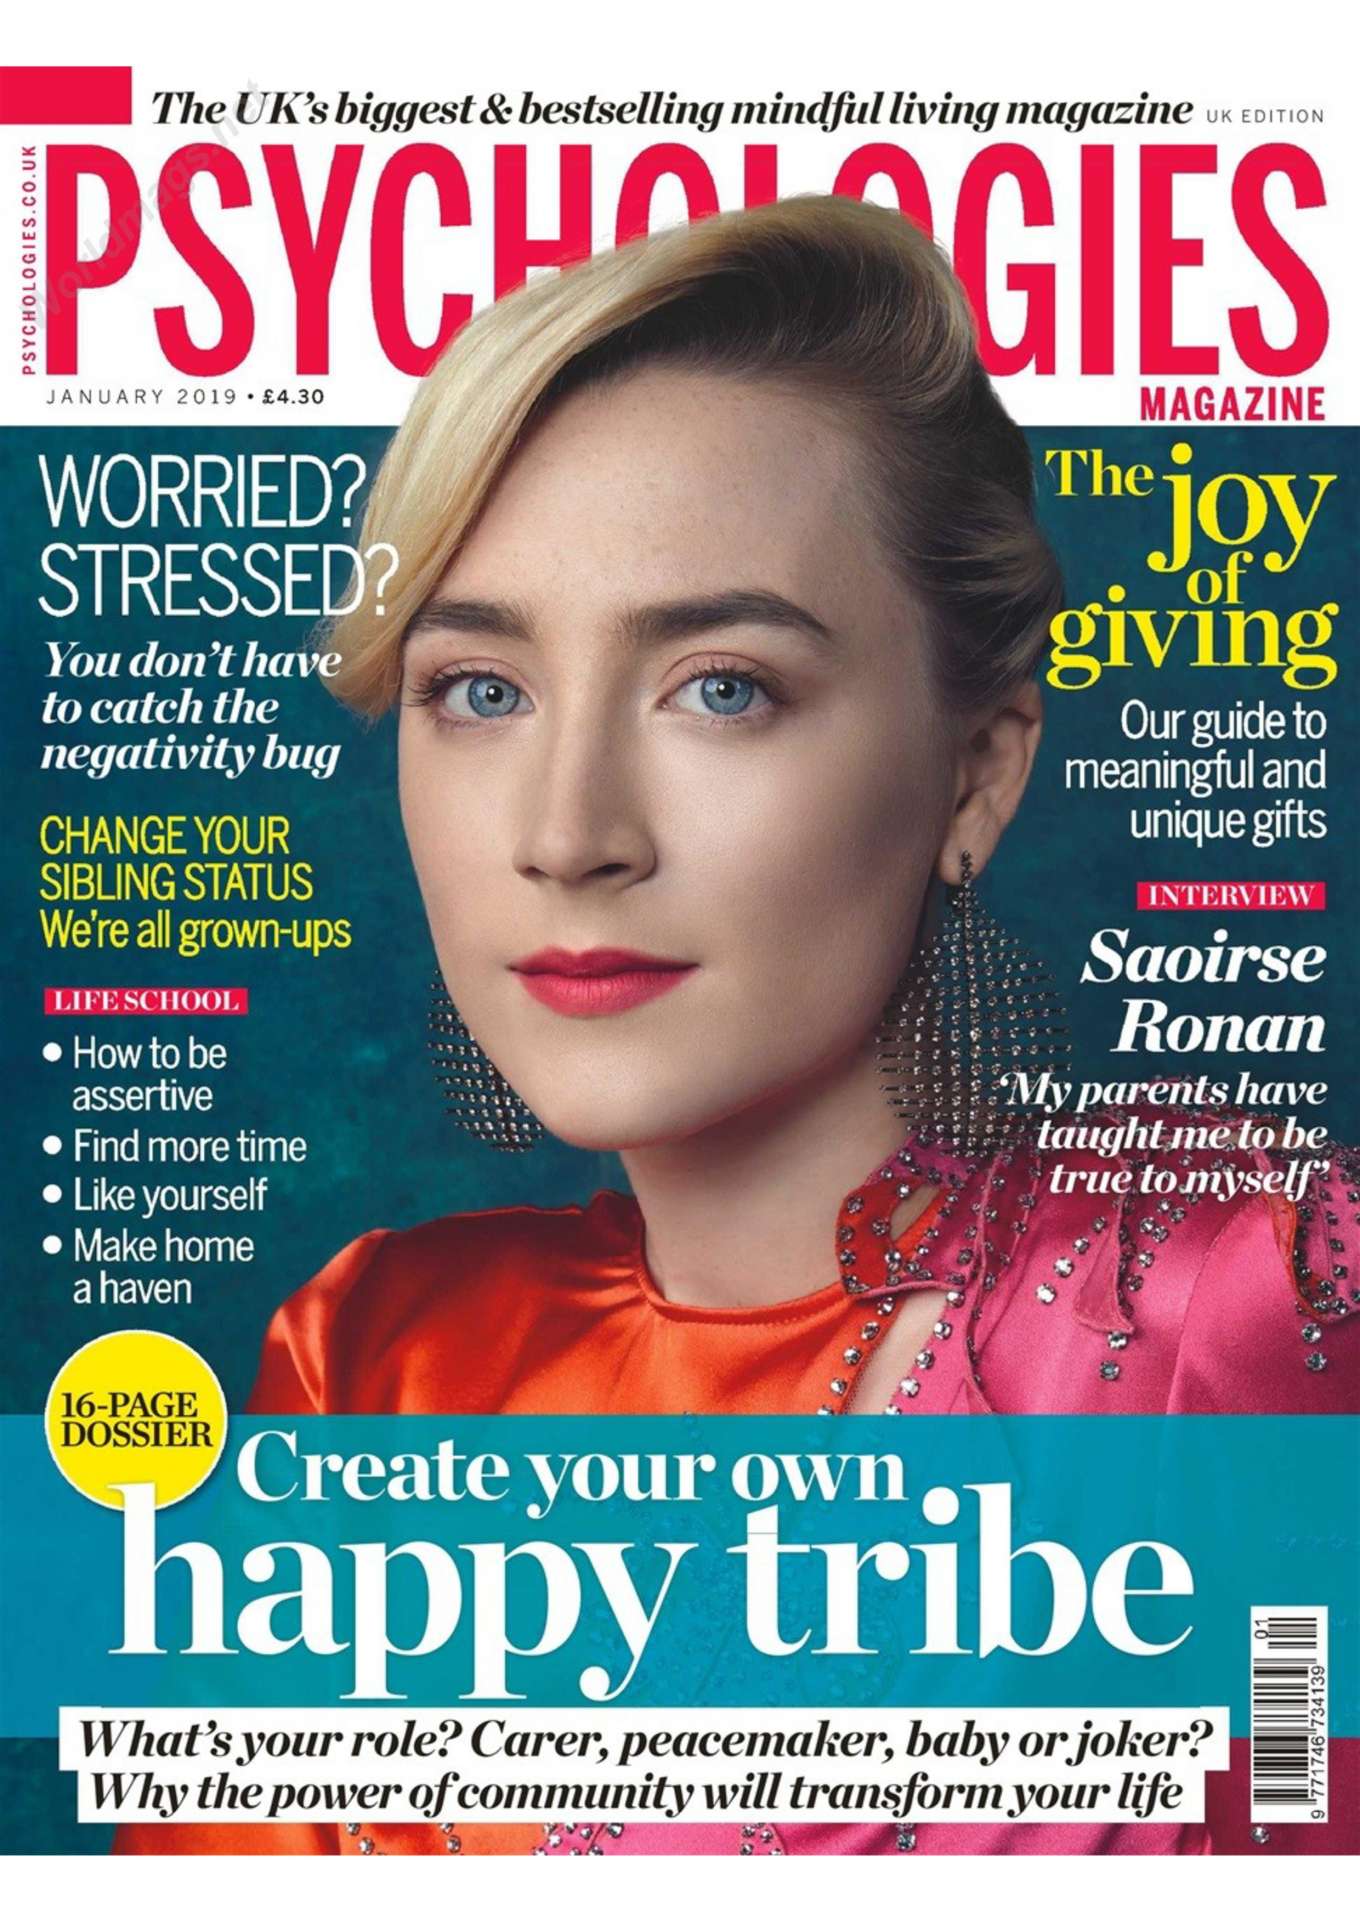 Saoirse Ronan â€“ Psychologies Magazine (UK January 2019 issue)